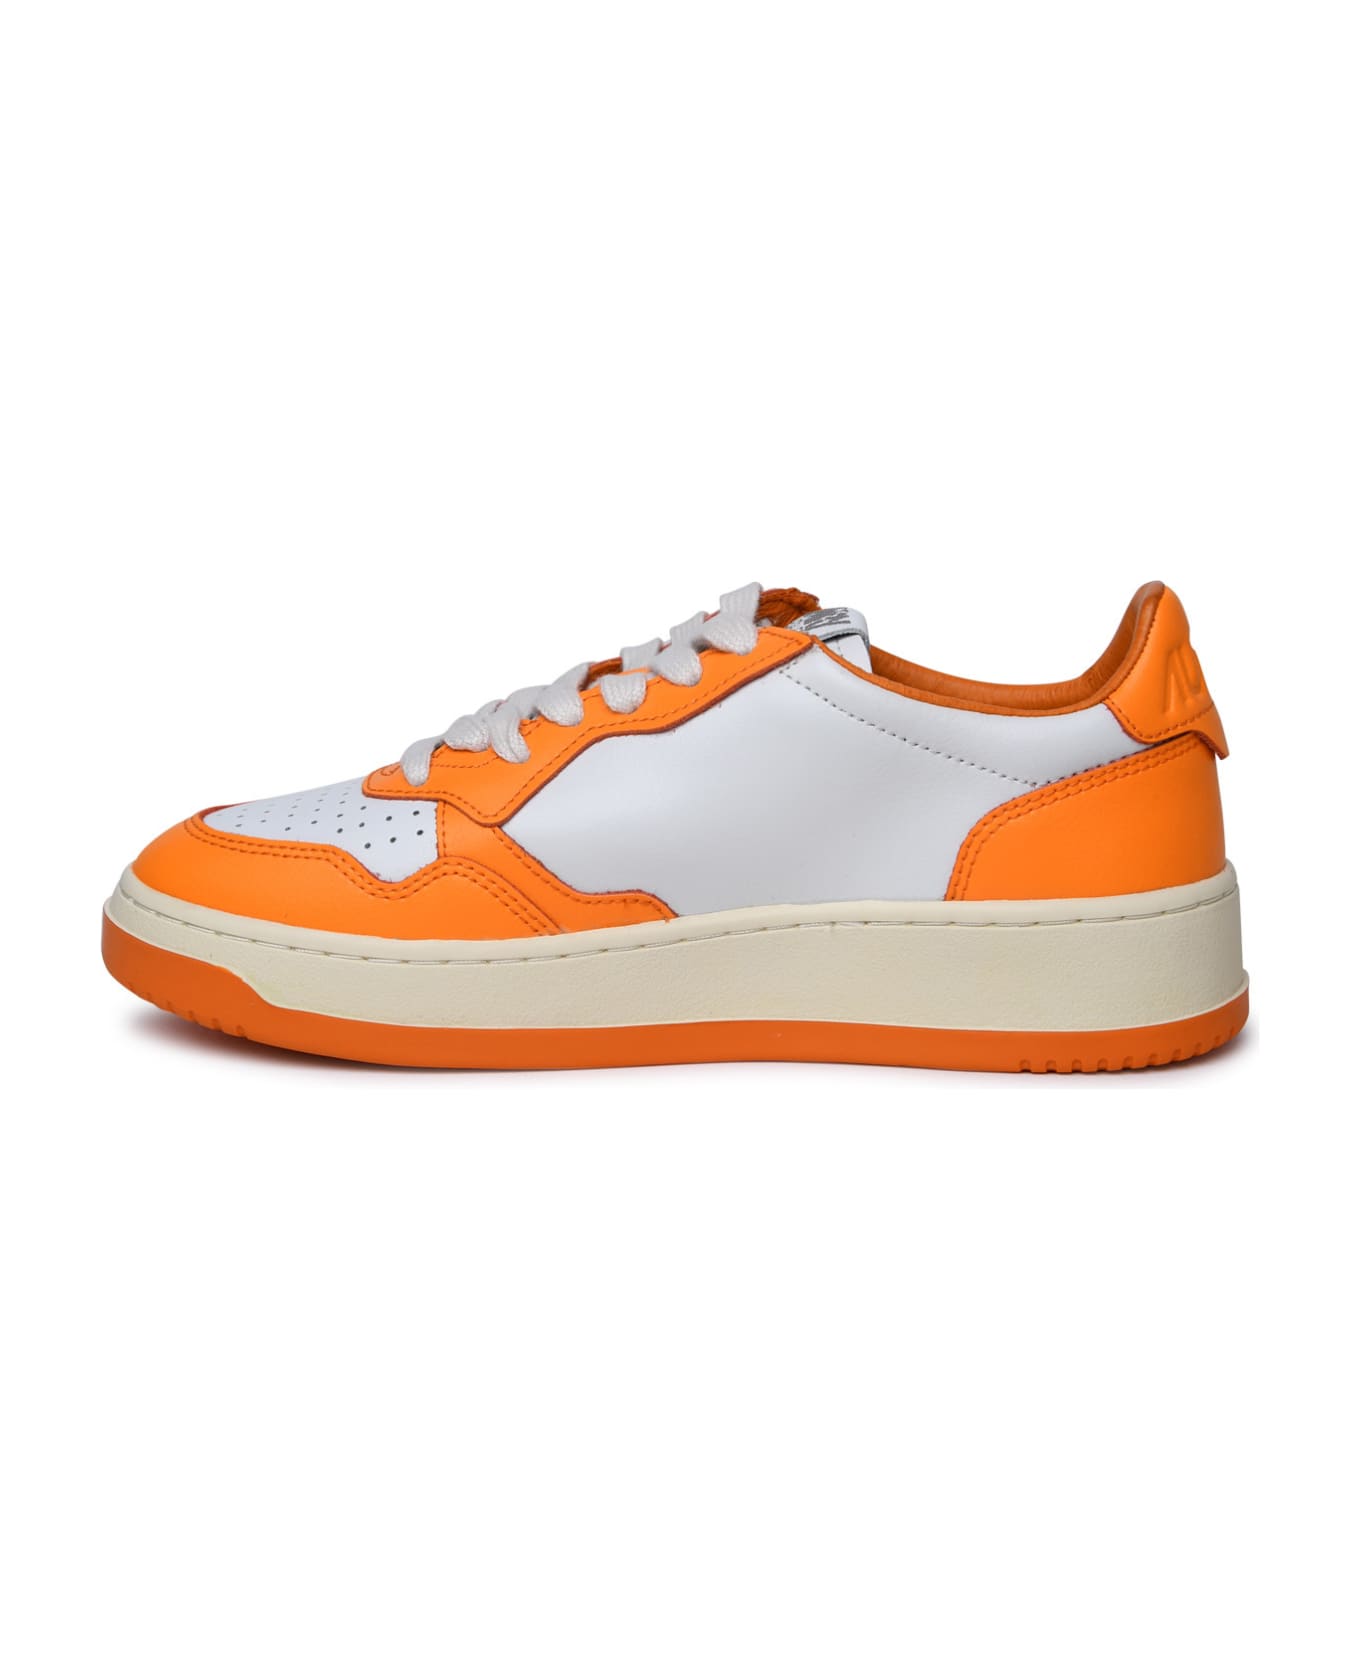 Autry 'medalist' Orange Leather Sneakers - White Orange